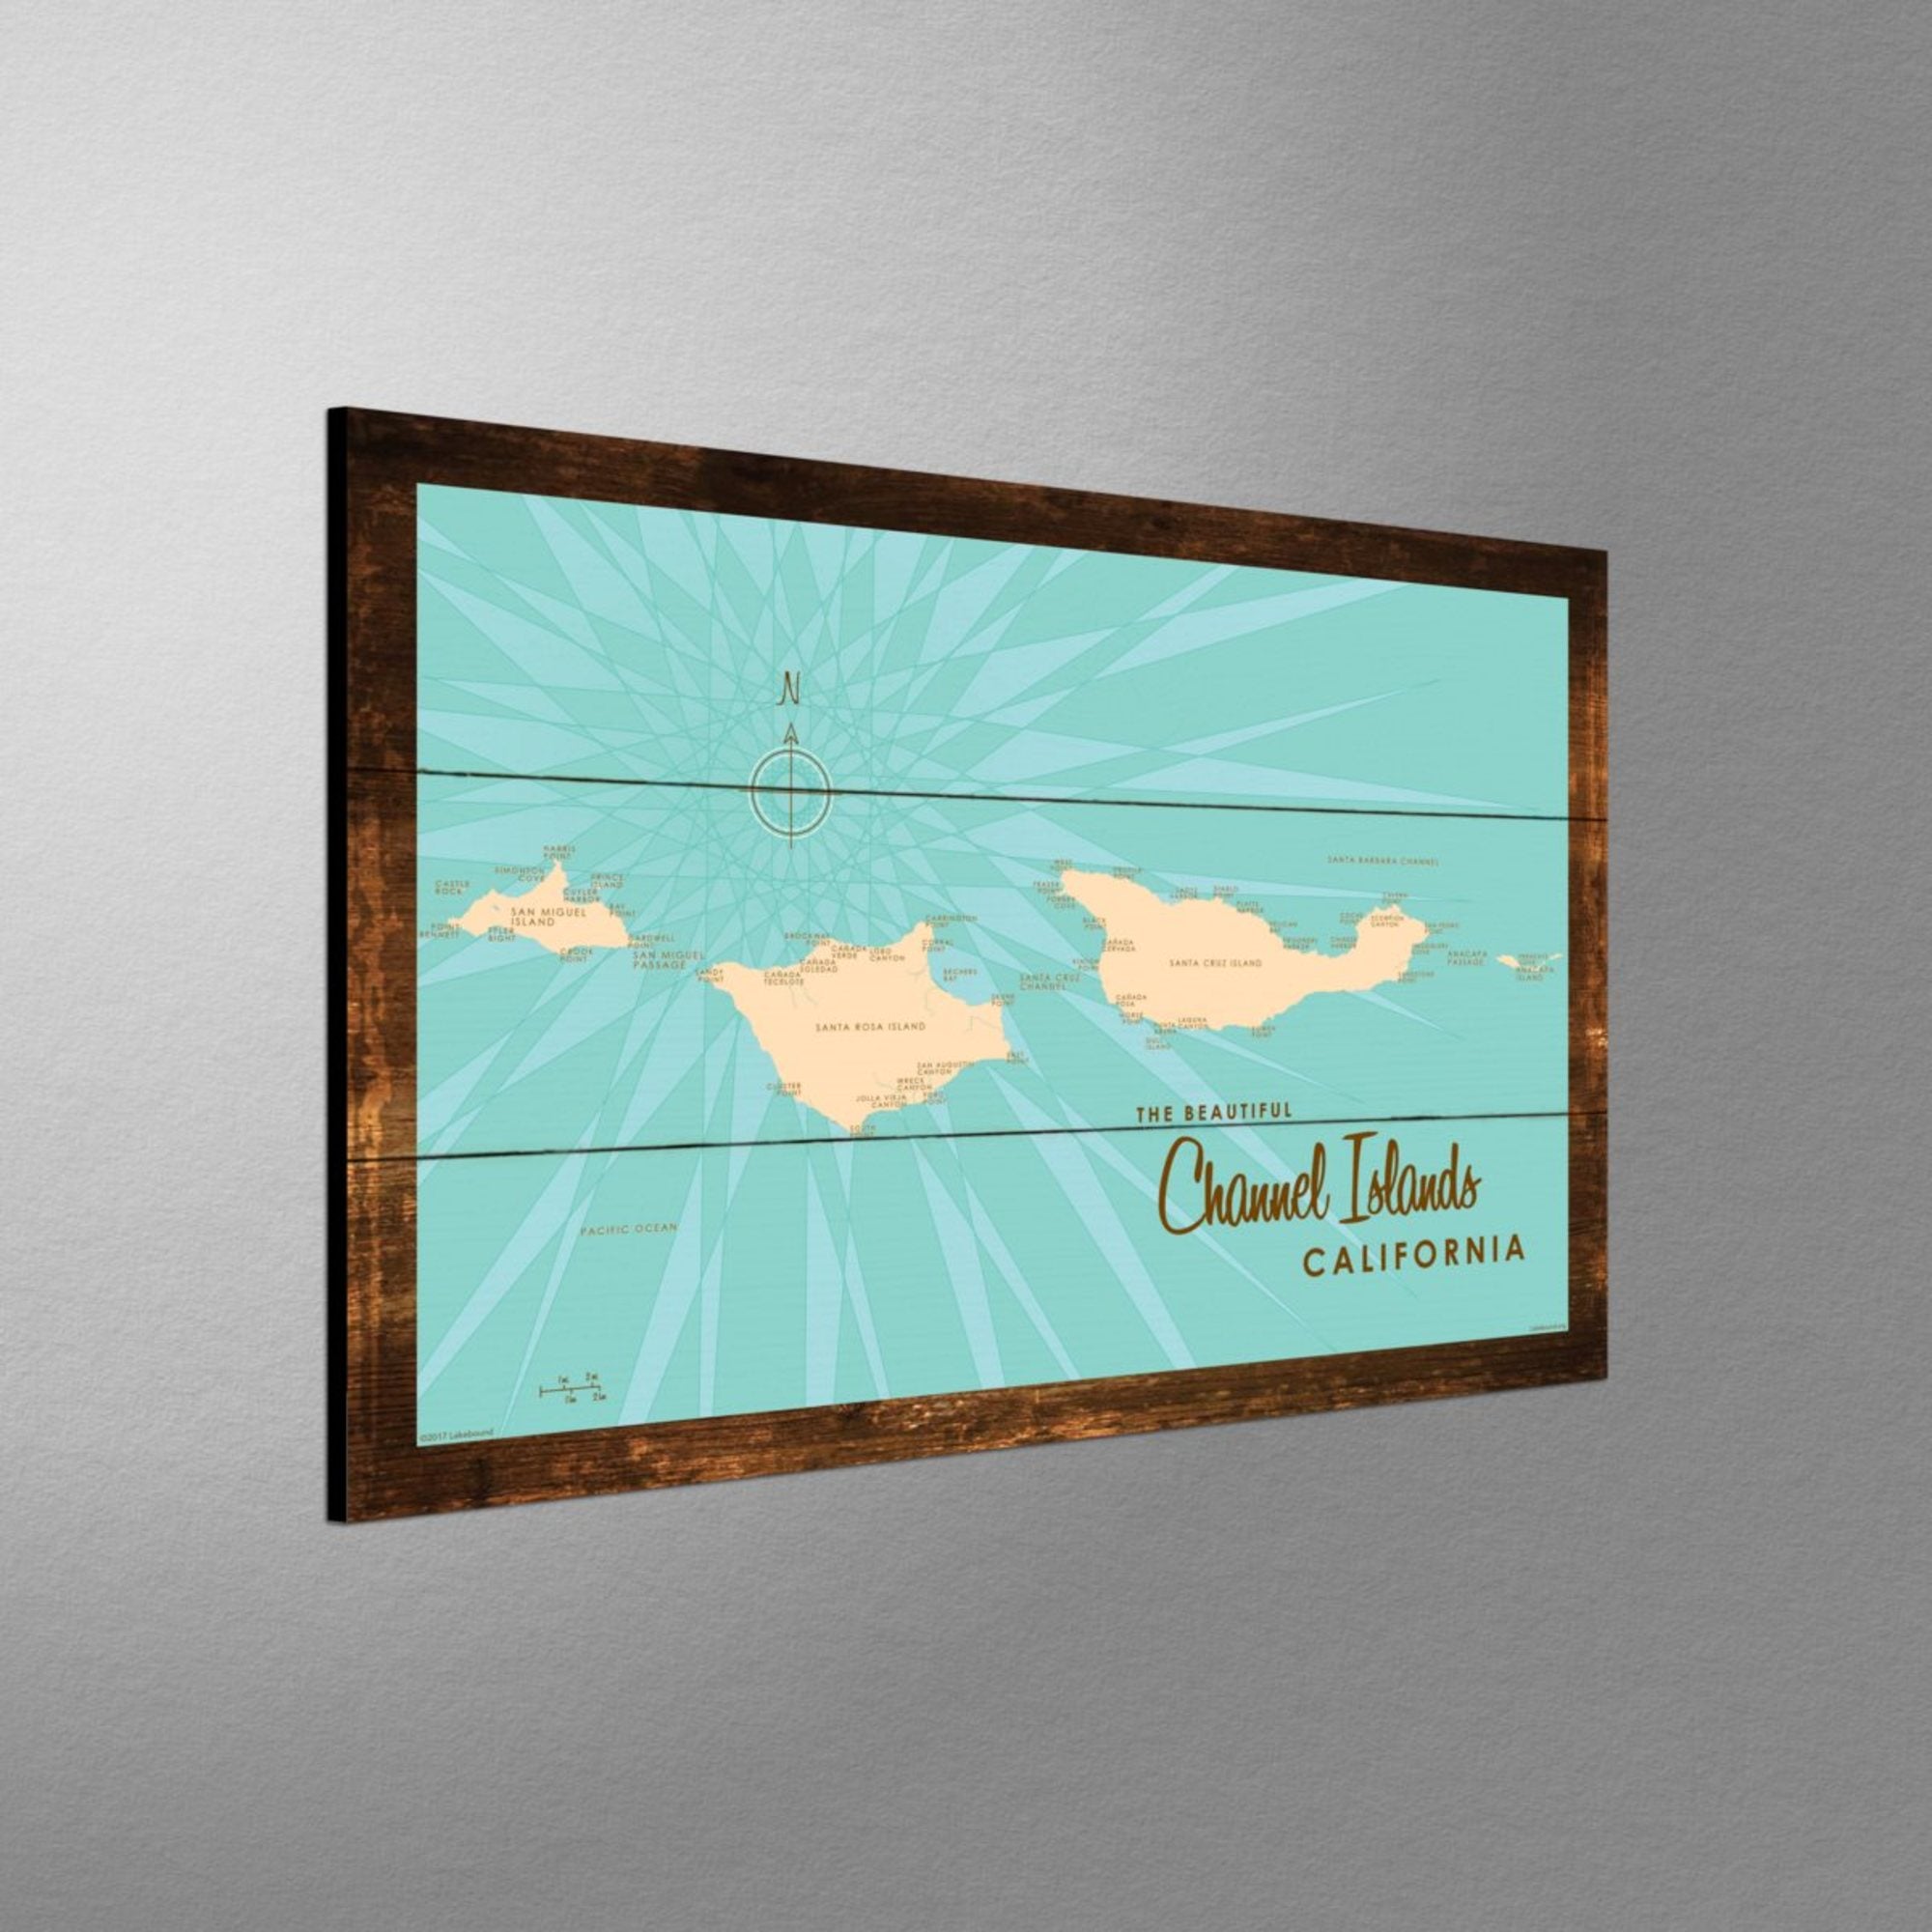 Channel Islands California, Rustic Wood Sign Map Art